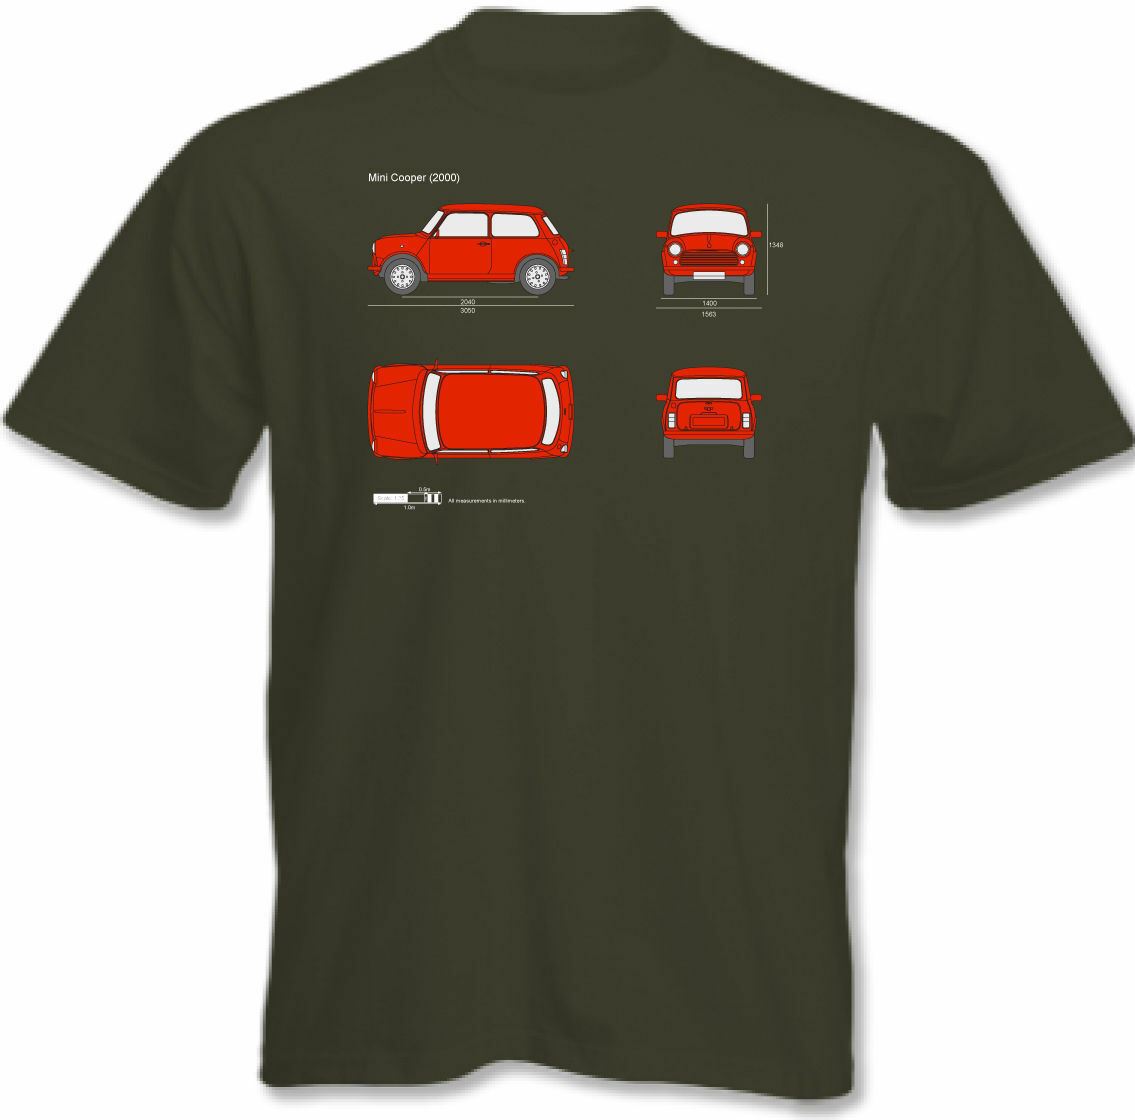 RetroClassic Monte Carlo Mini Classic Sports Car Design Mens T-Shirt 